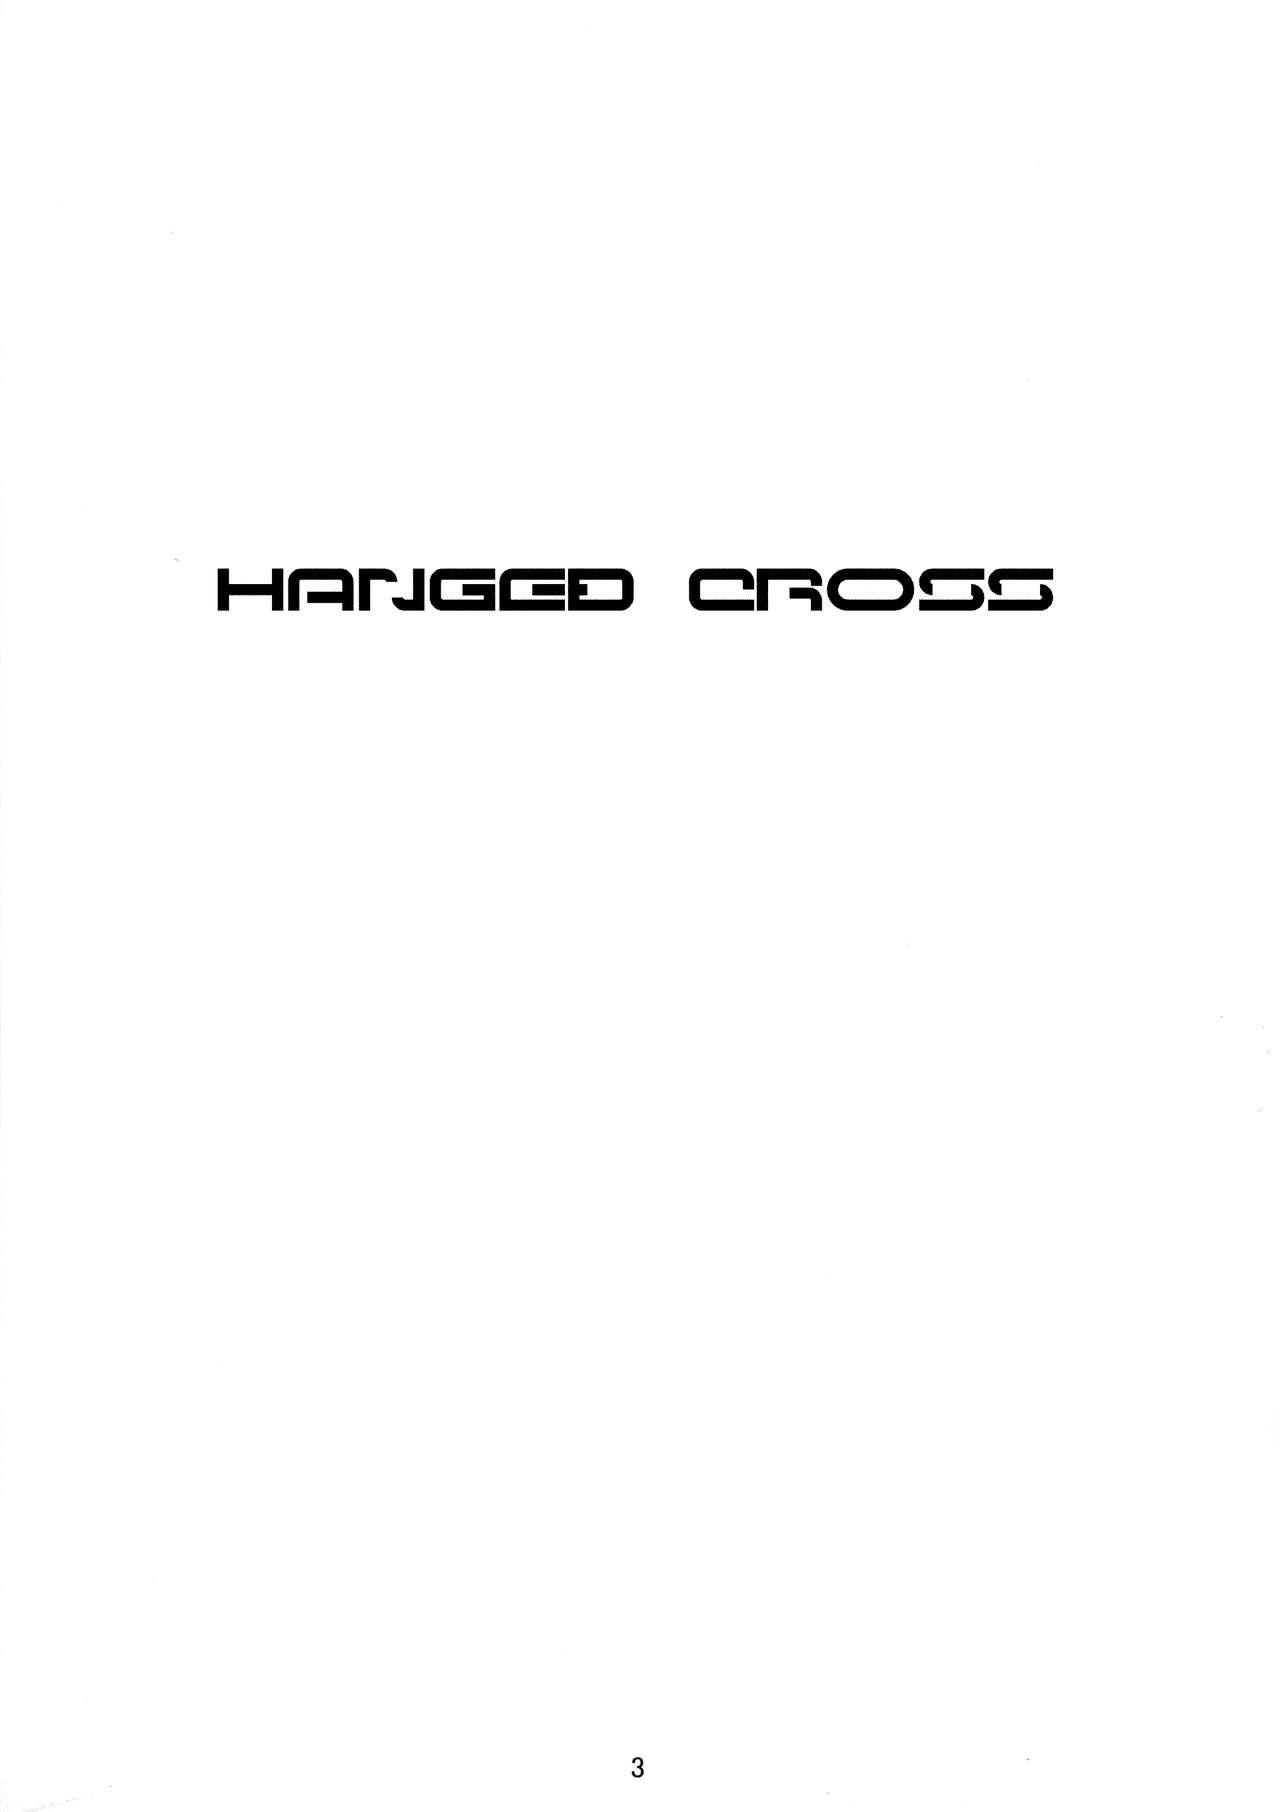 HANGED CROSS 2